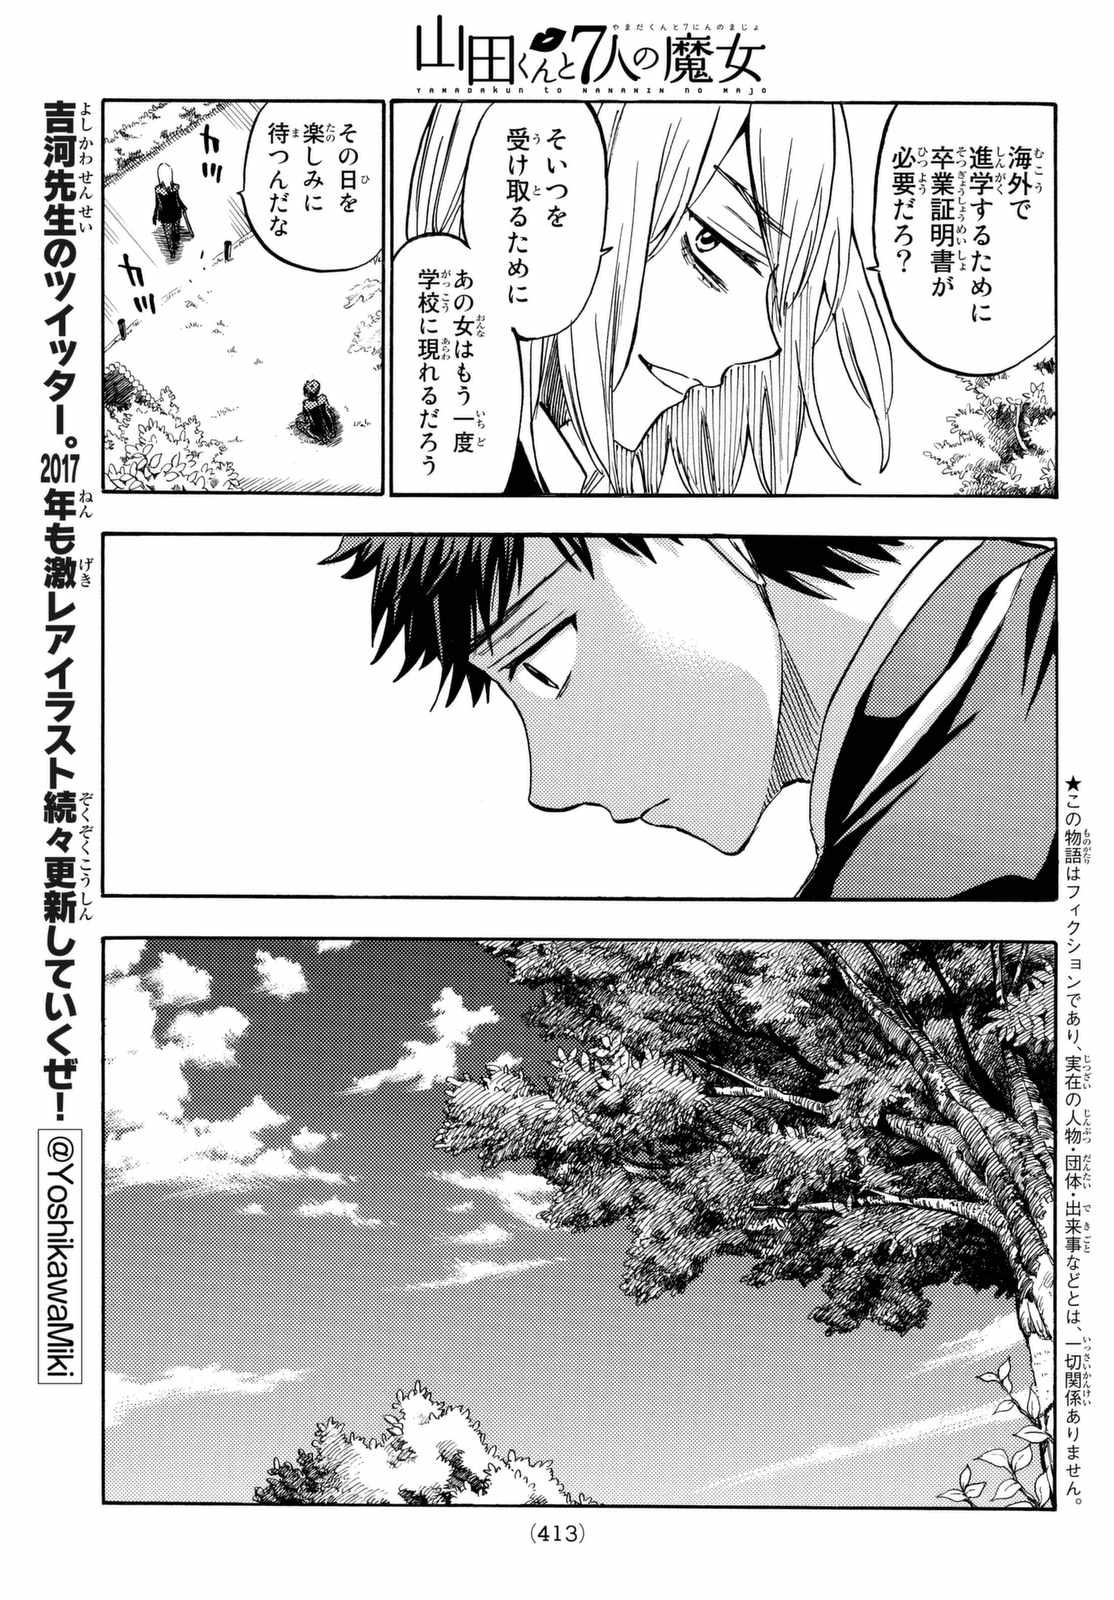 Yamada-kun to 7-nin no Majo - Chapter 237 - Page 3